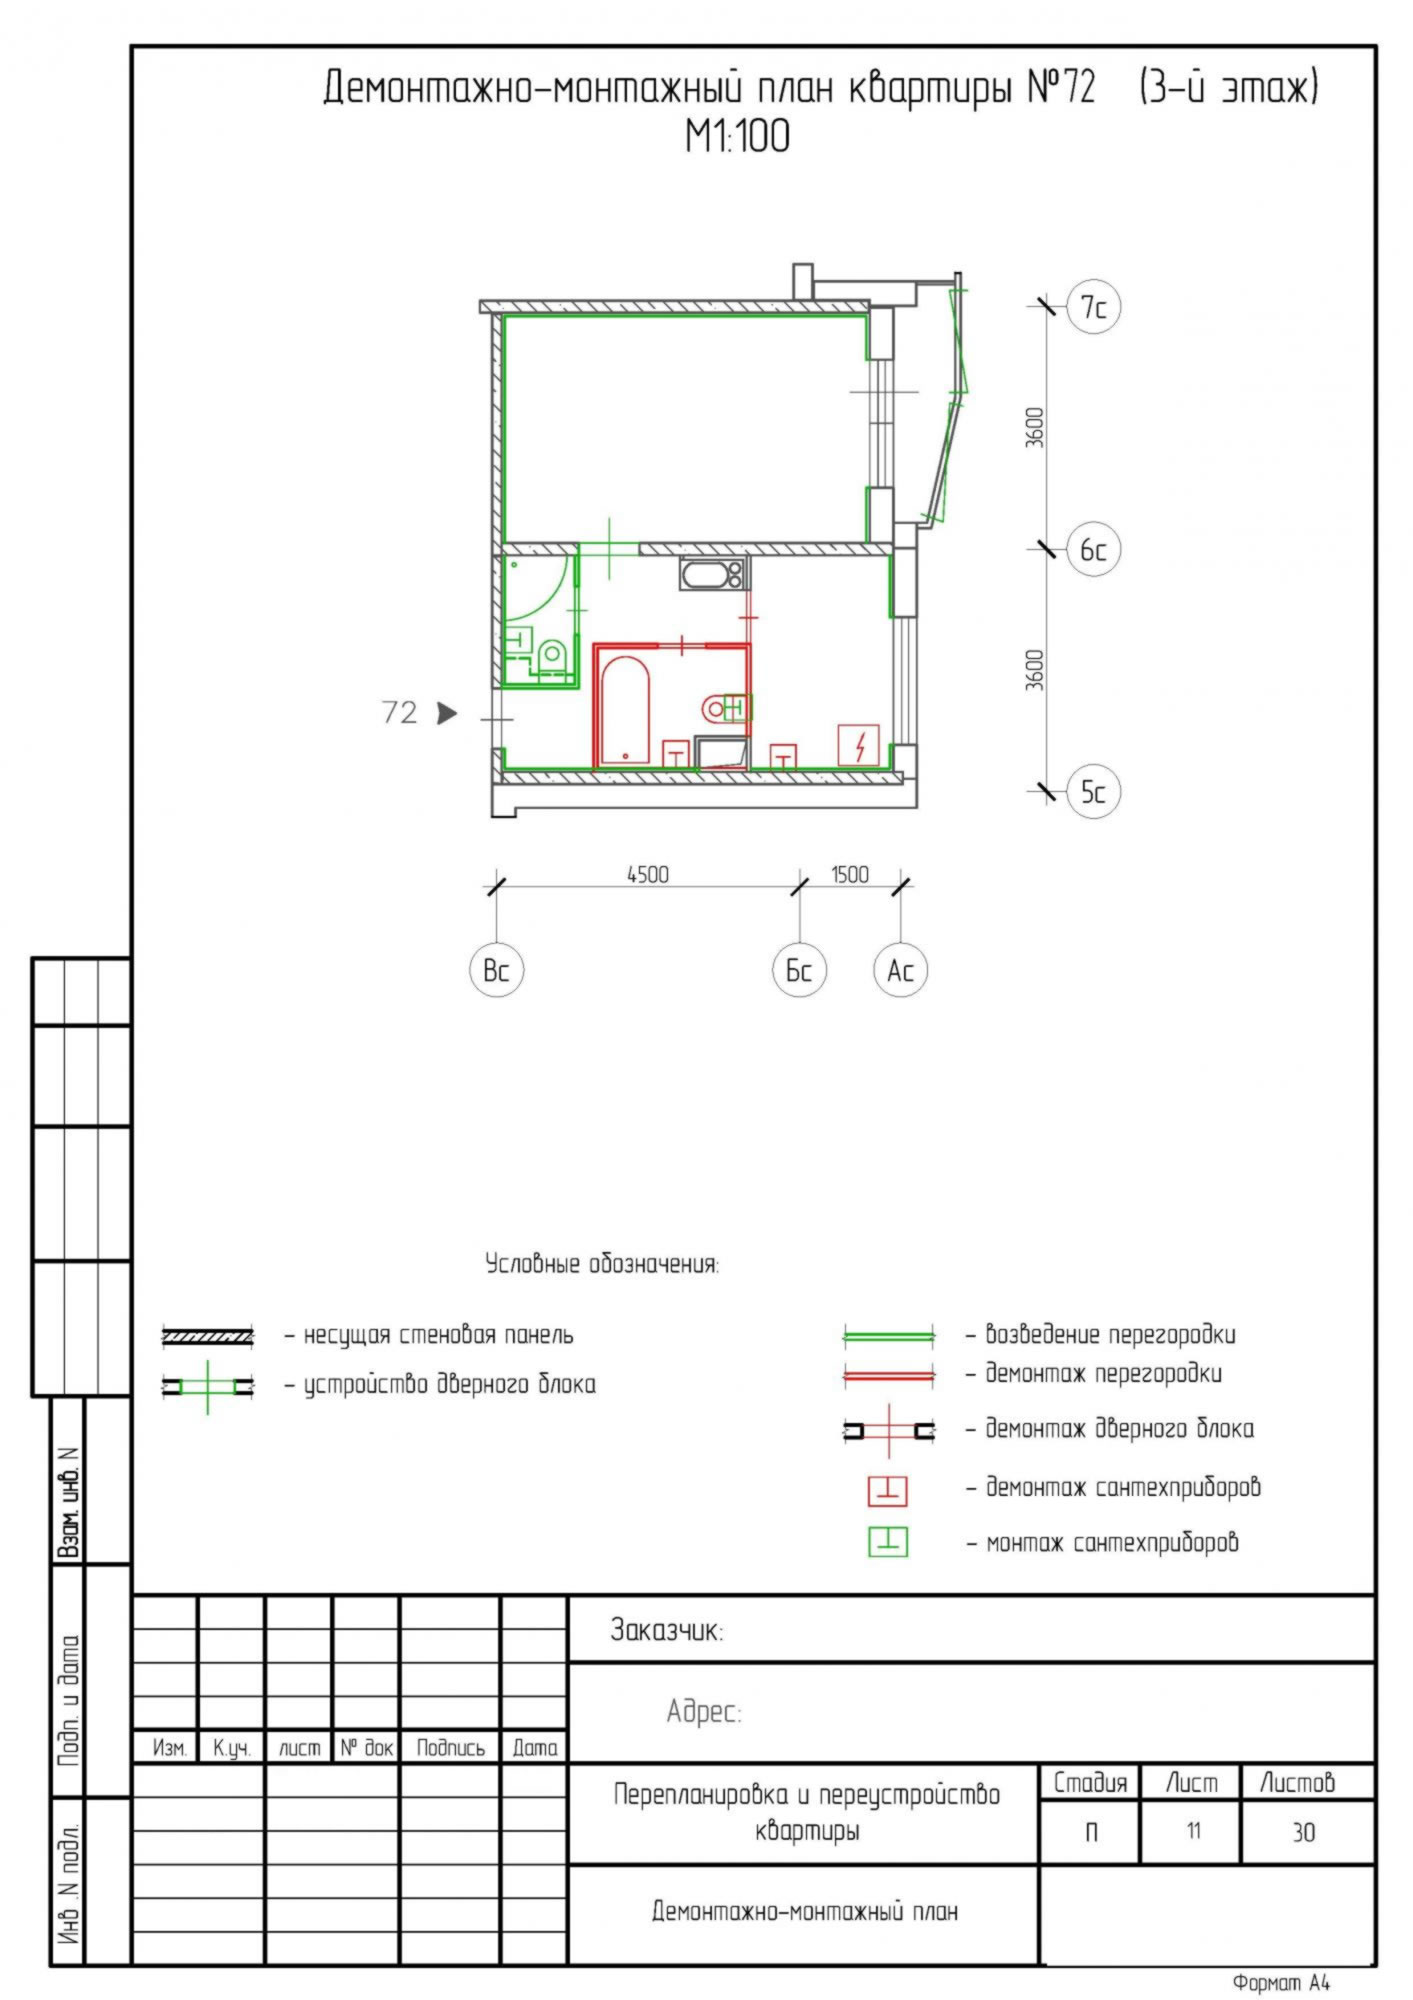 Демонтажно-монтажный план квартиры